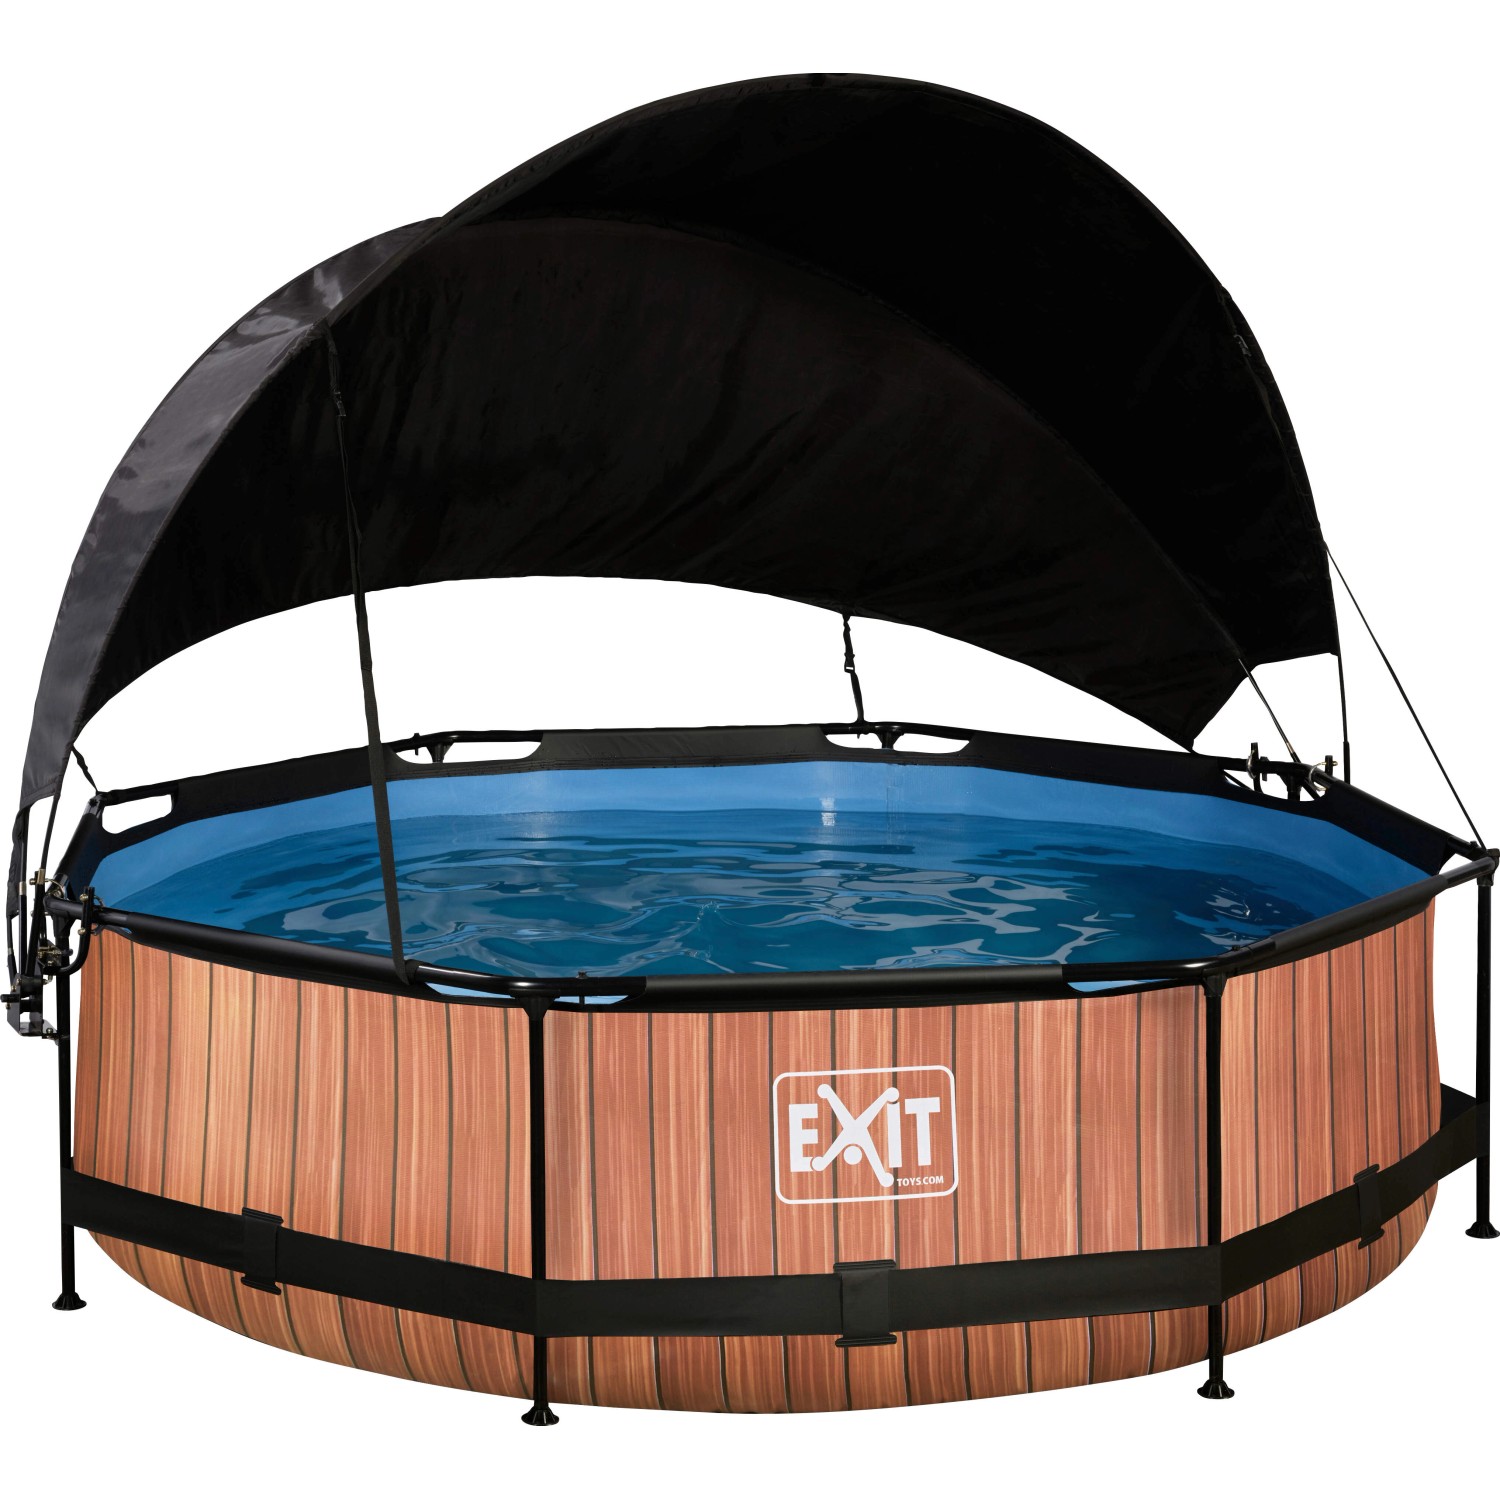 EXIT Wood Pool Braun ø 300 x 76 cm m. Filterpumpe u. Sonnensegel